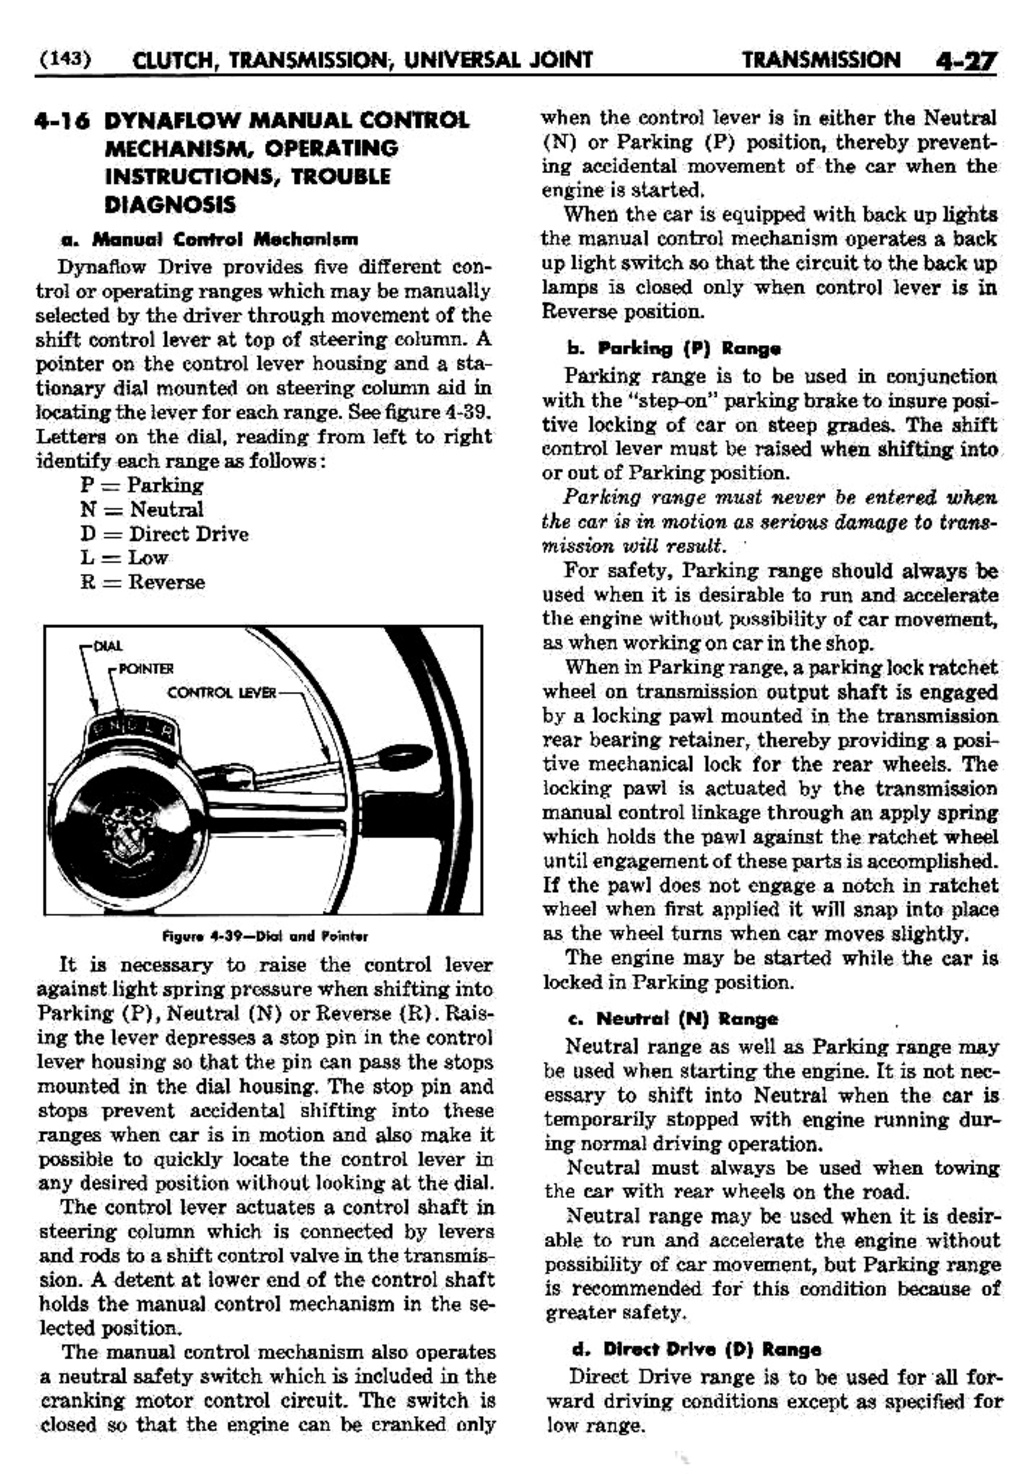 n_05 1950 Buick Shop Manual - Transmission-027-027.jpg